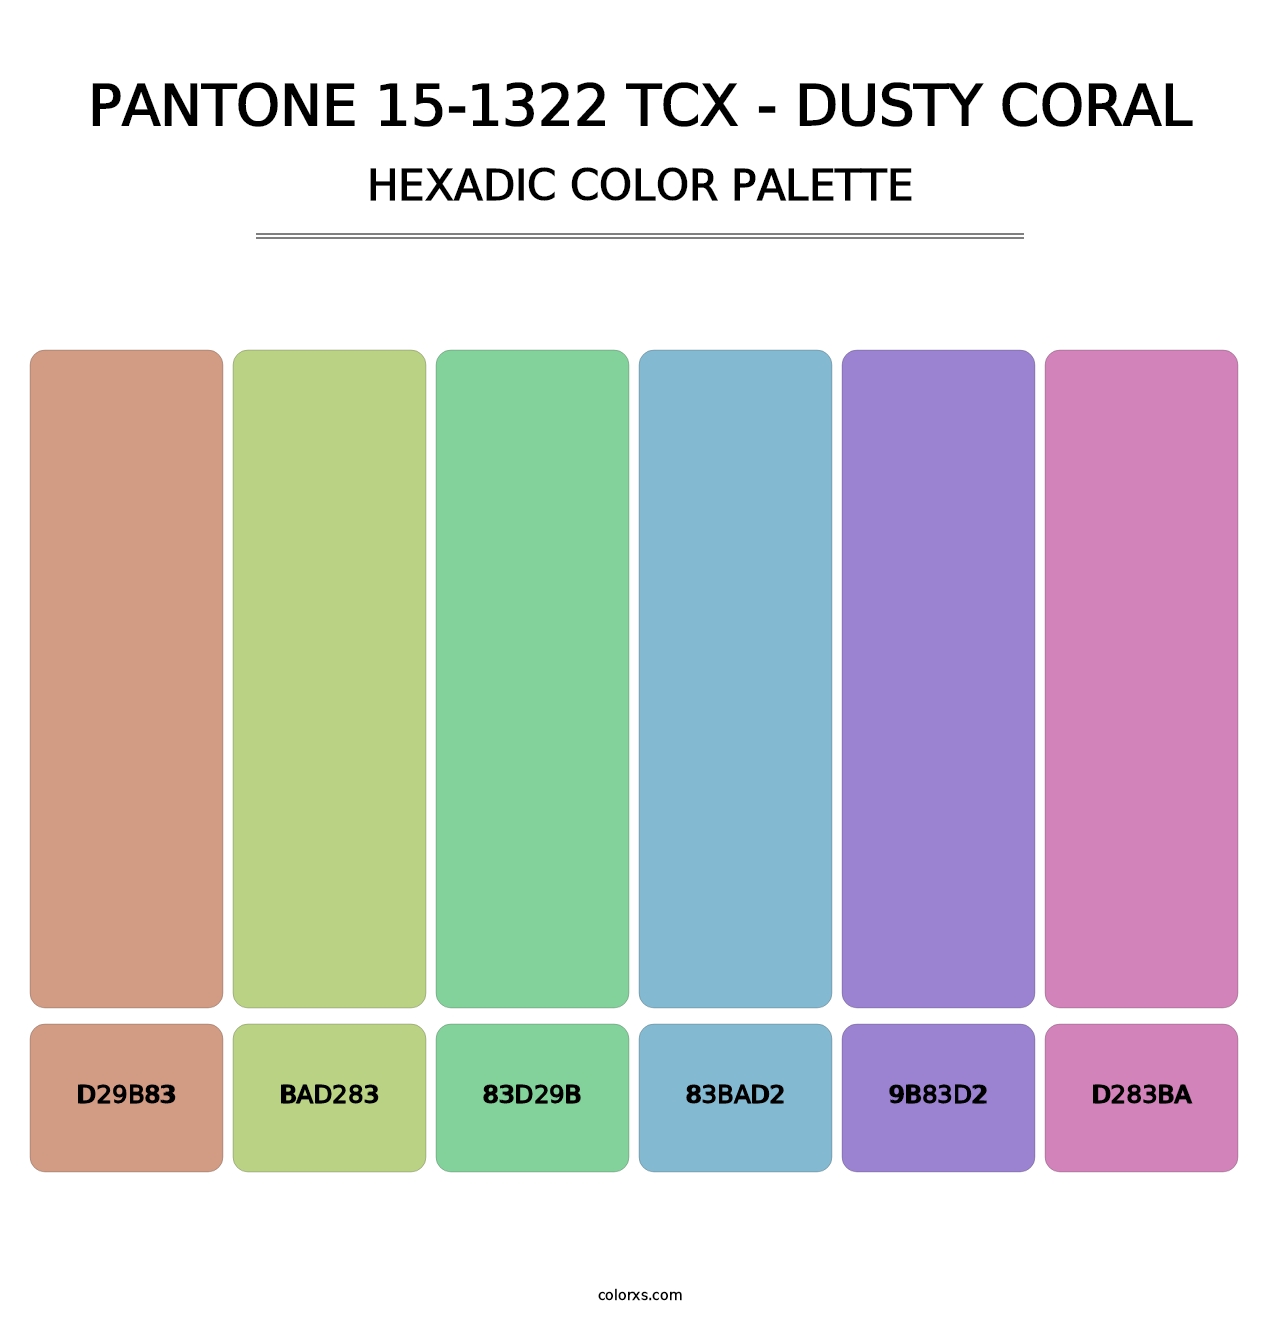 PANTONE 15-1322 TCX - Dusty Coral - Hexadic Color Palette